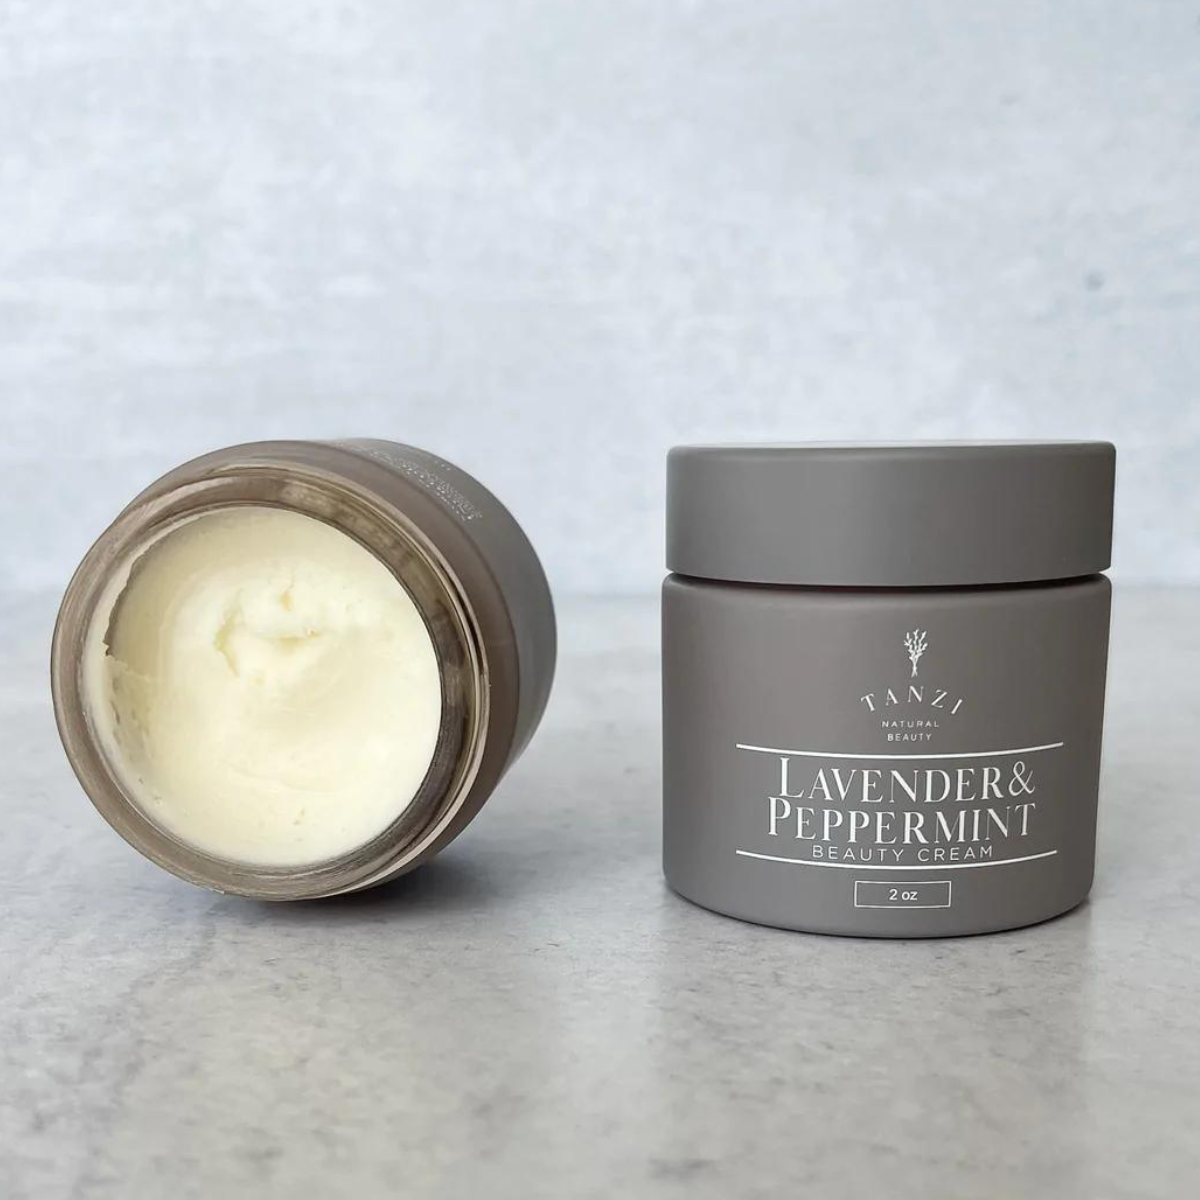 Tanzi Natural Beauty Lavender & Peppermint Beauty Cream